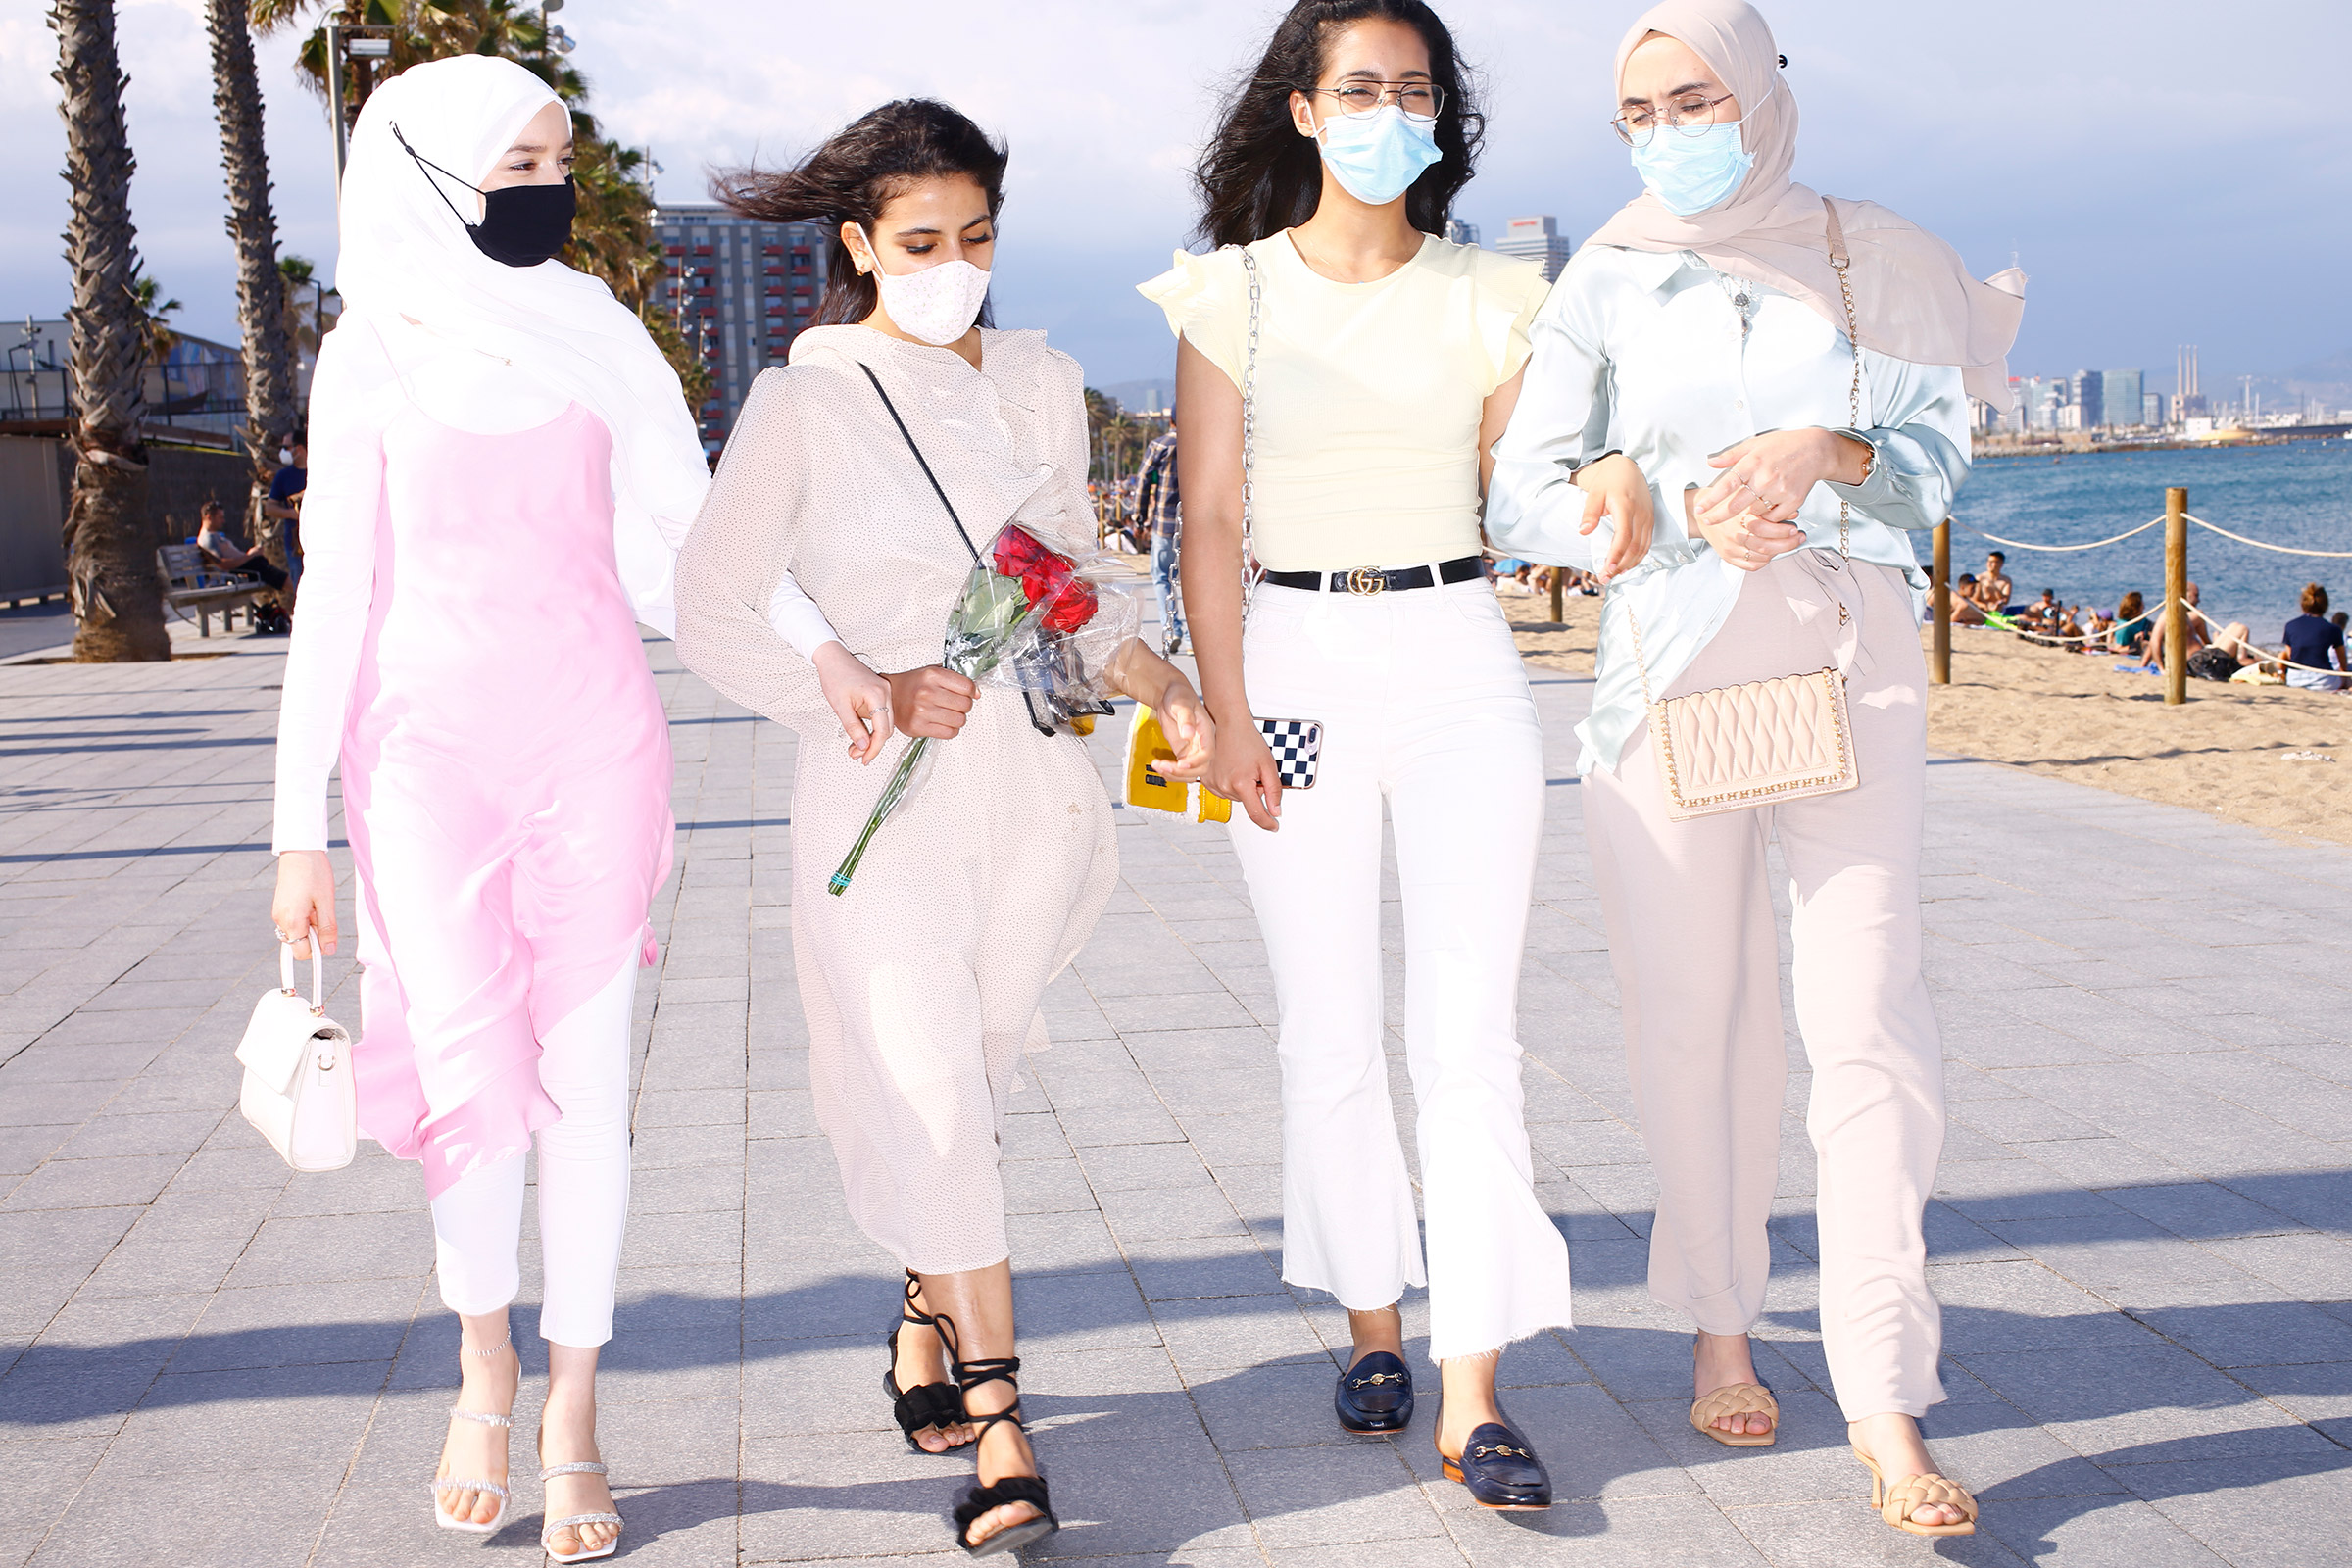 Young women stroll along Barceloneta Beach on June 6. (Ricardo Cases for TIME)